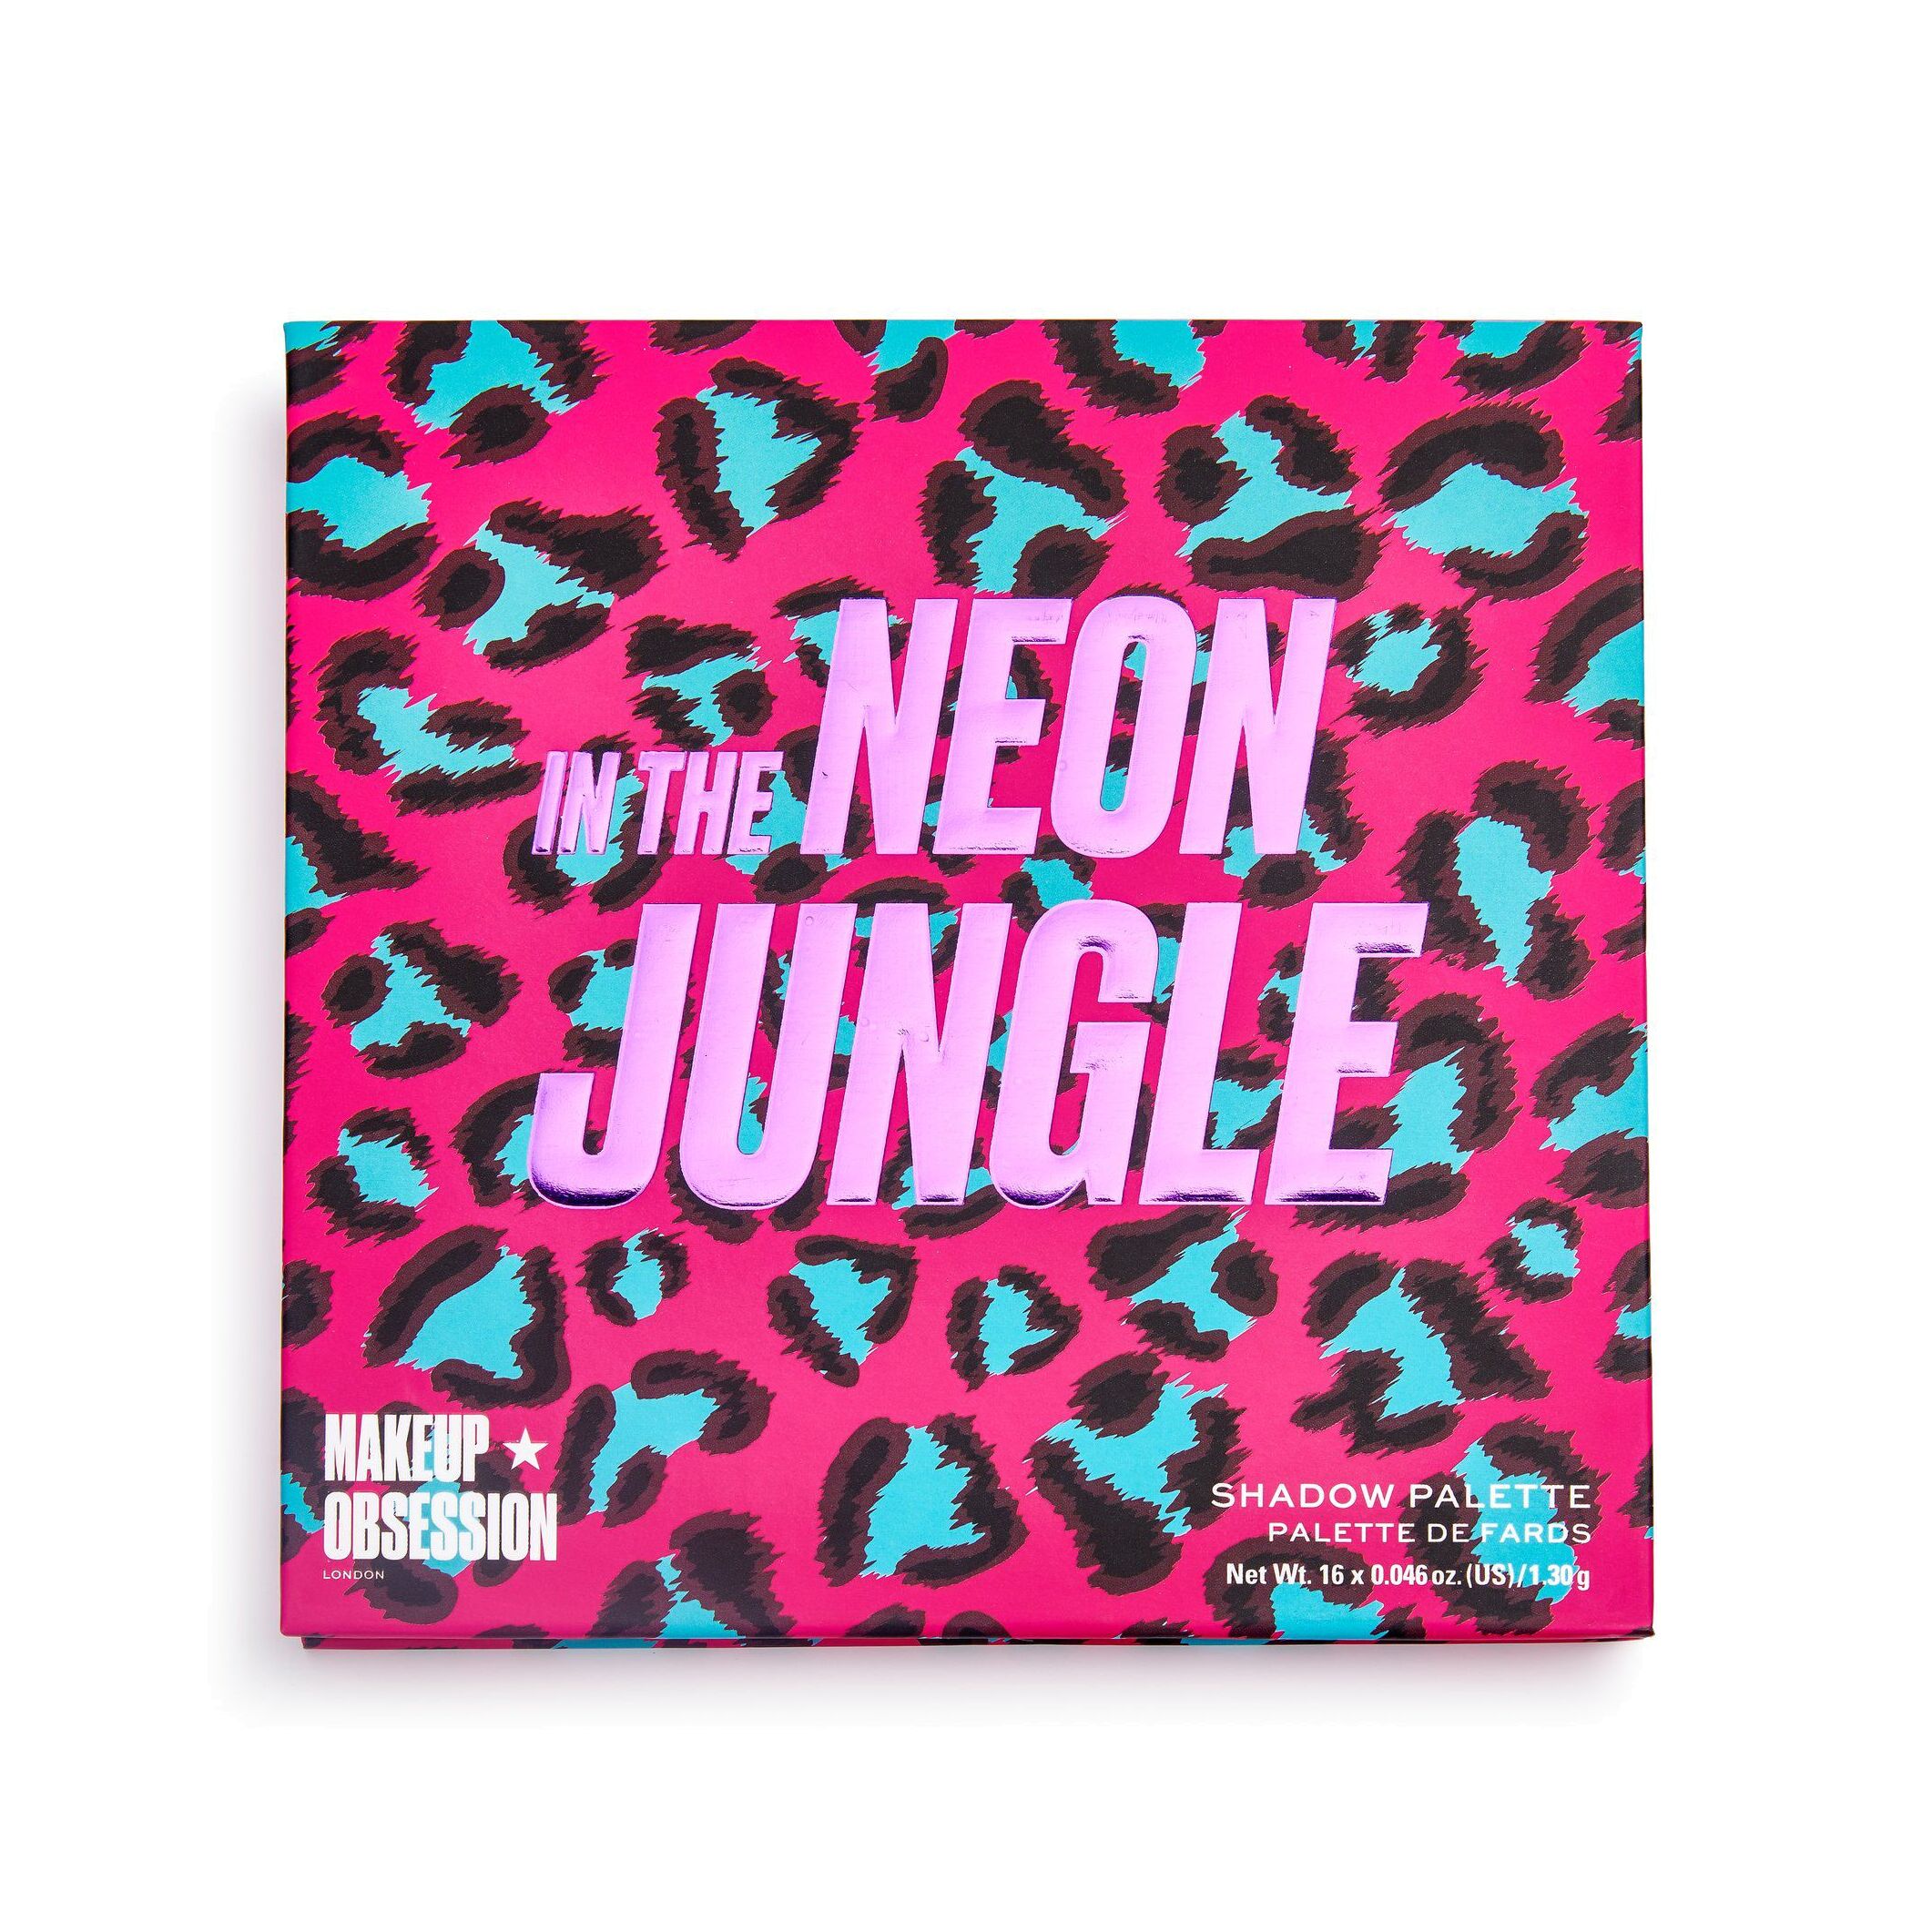 Палетка теней для век In The Neon Jungle VISAGEHALL